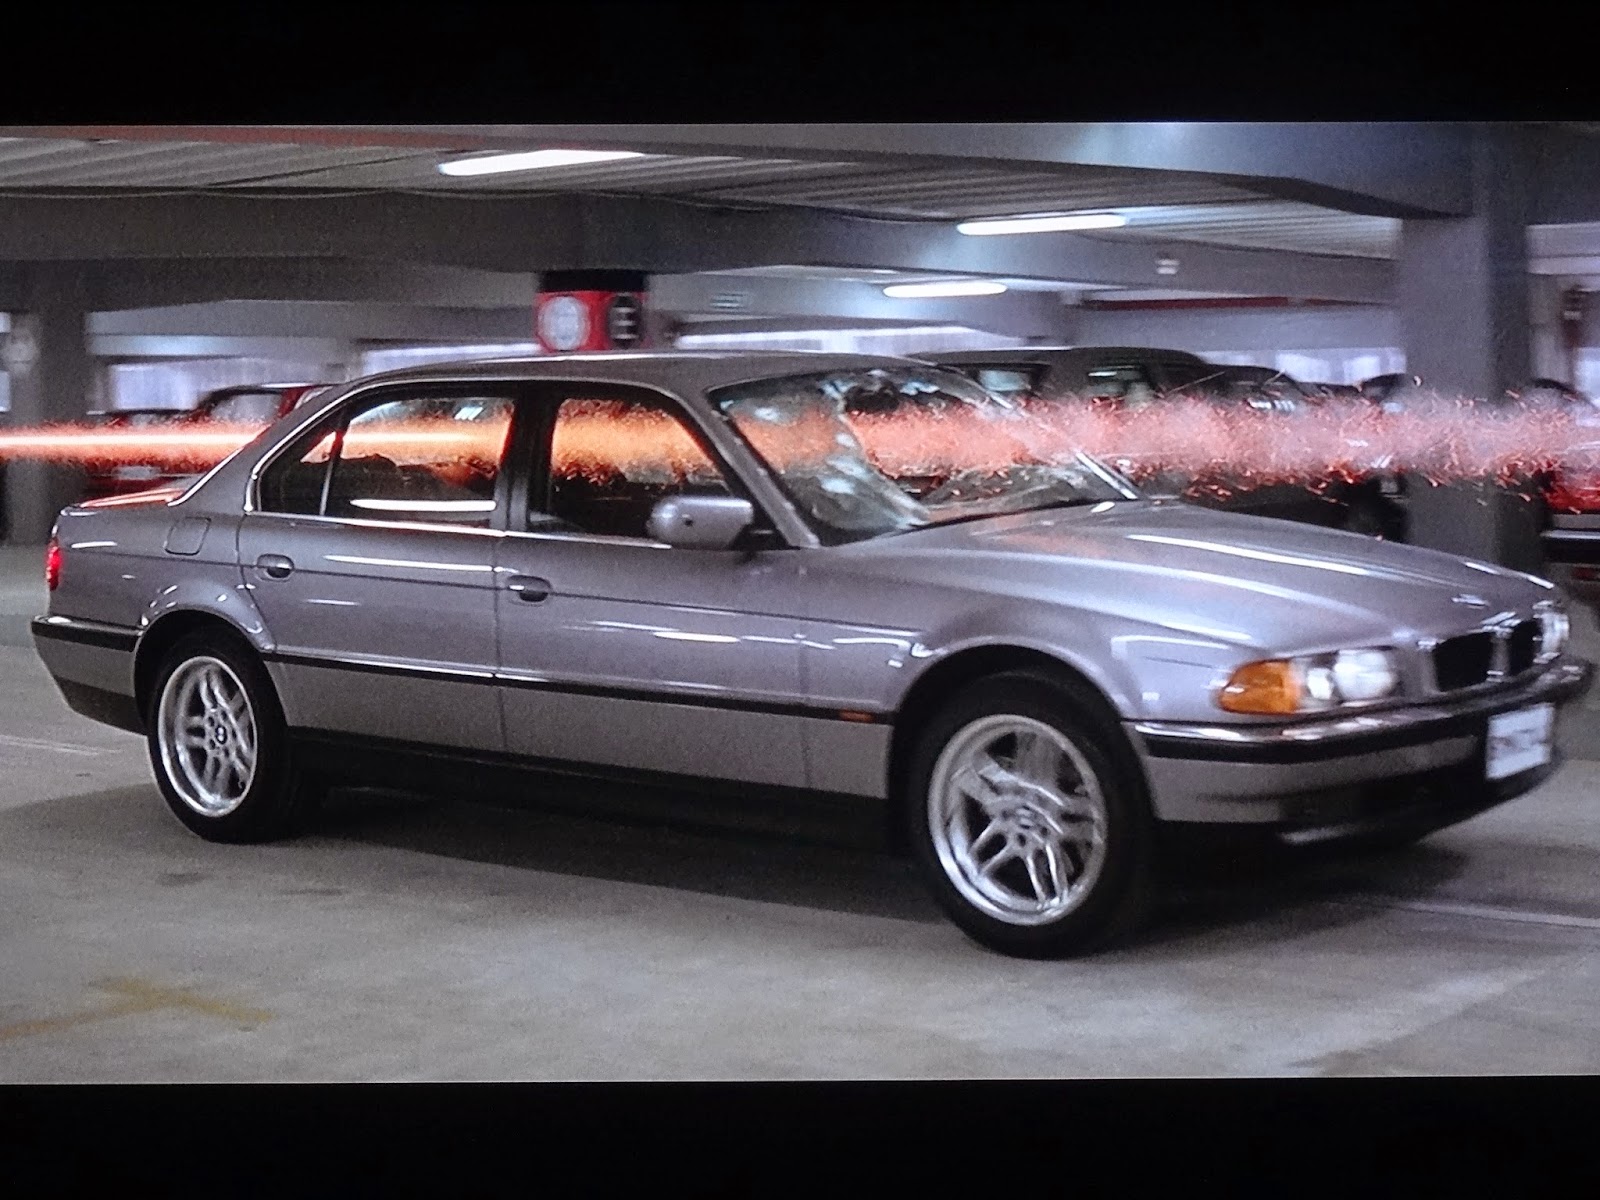 007 TRAVELERS: 007 Vehicle: BMW 750iL / Tomorrow Never Dies (1997)